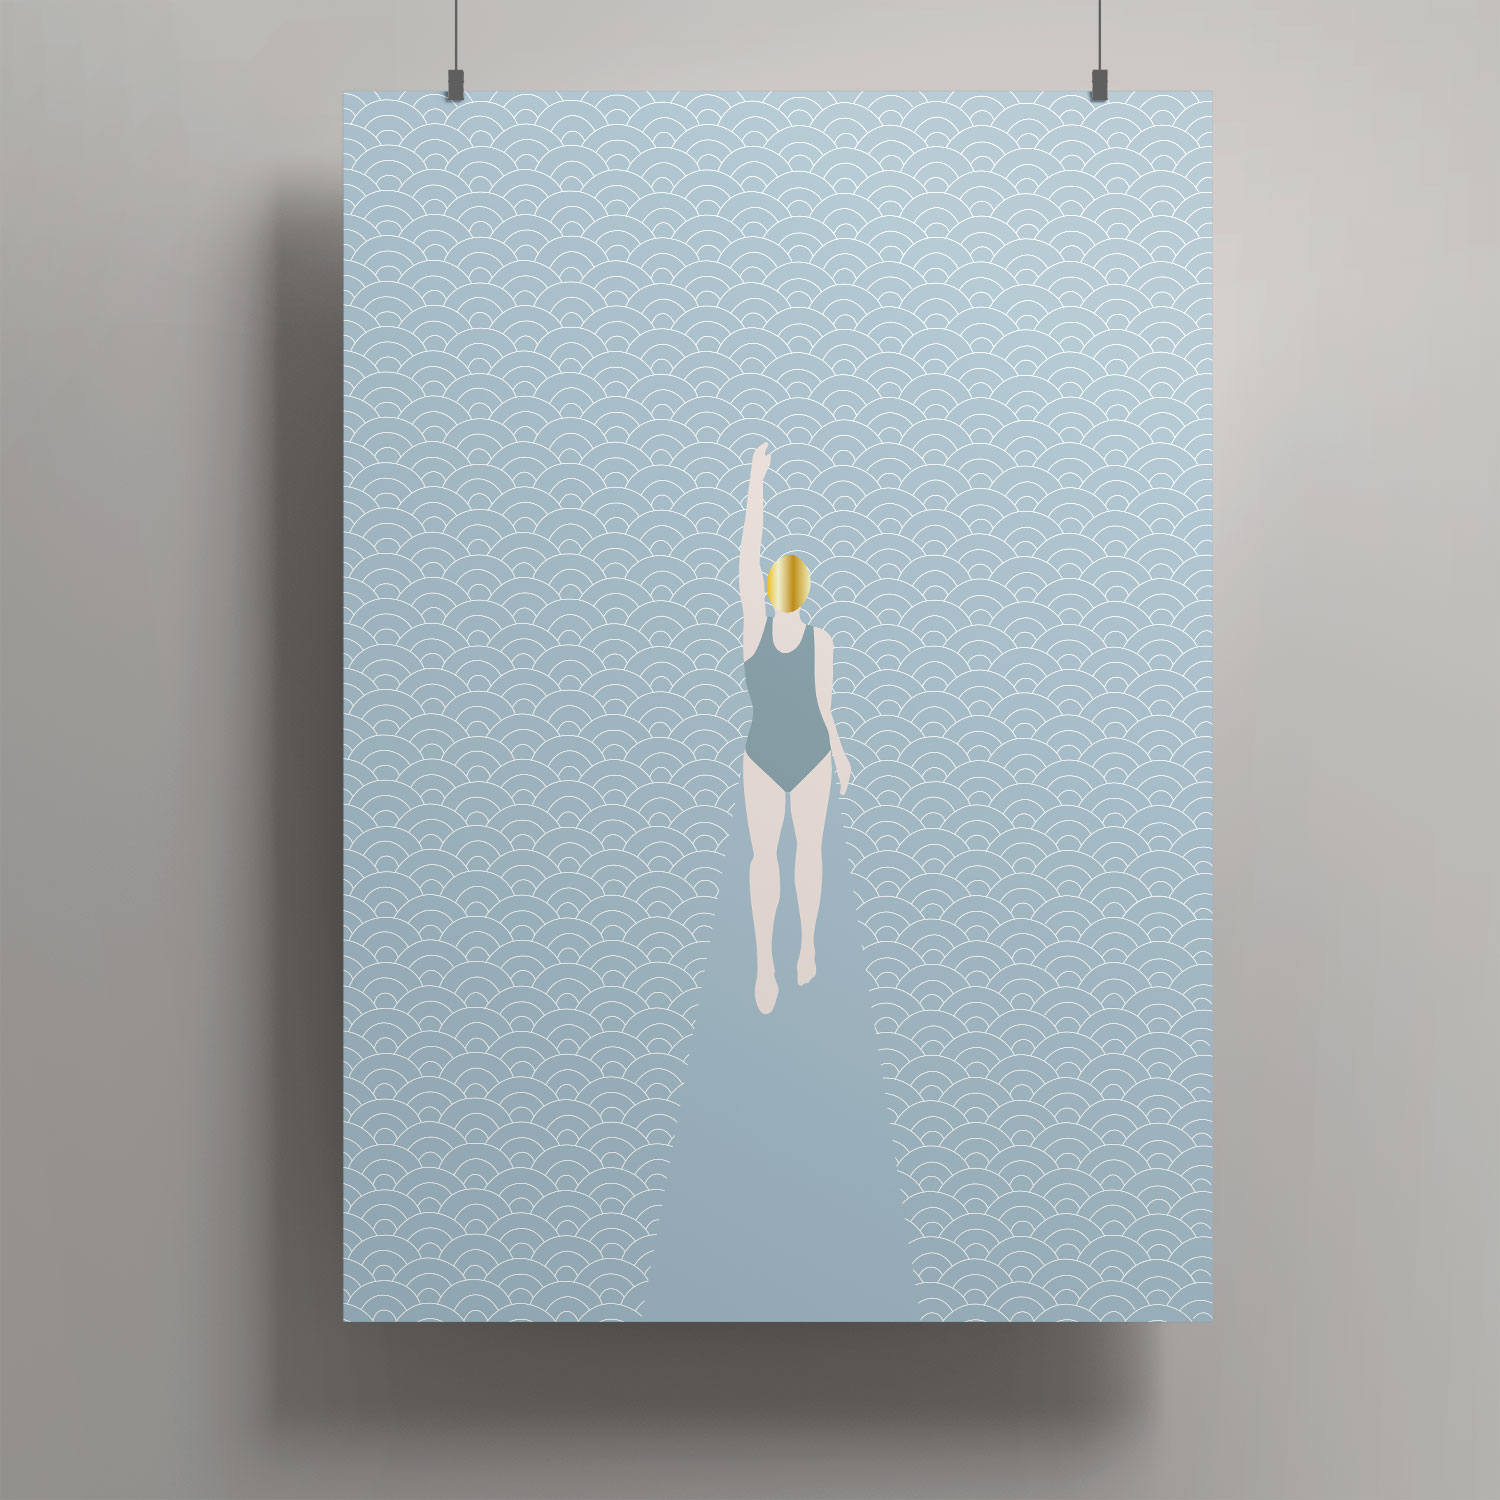 Artprint A3 - Toni Starck - swimmer in waves